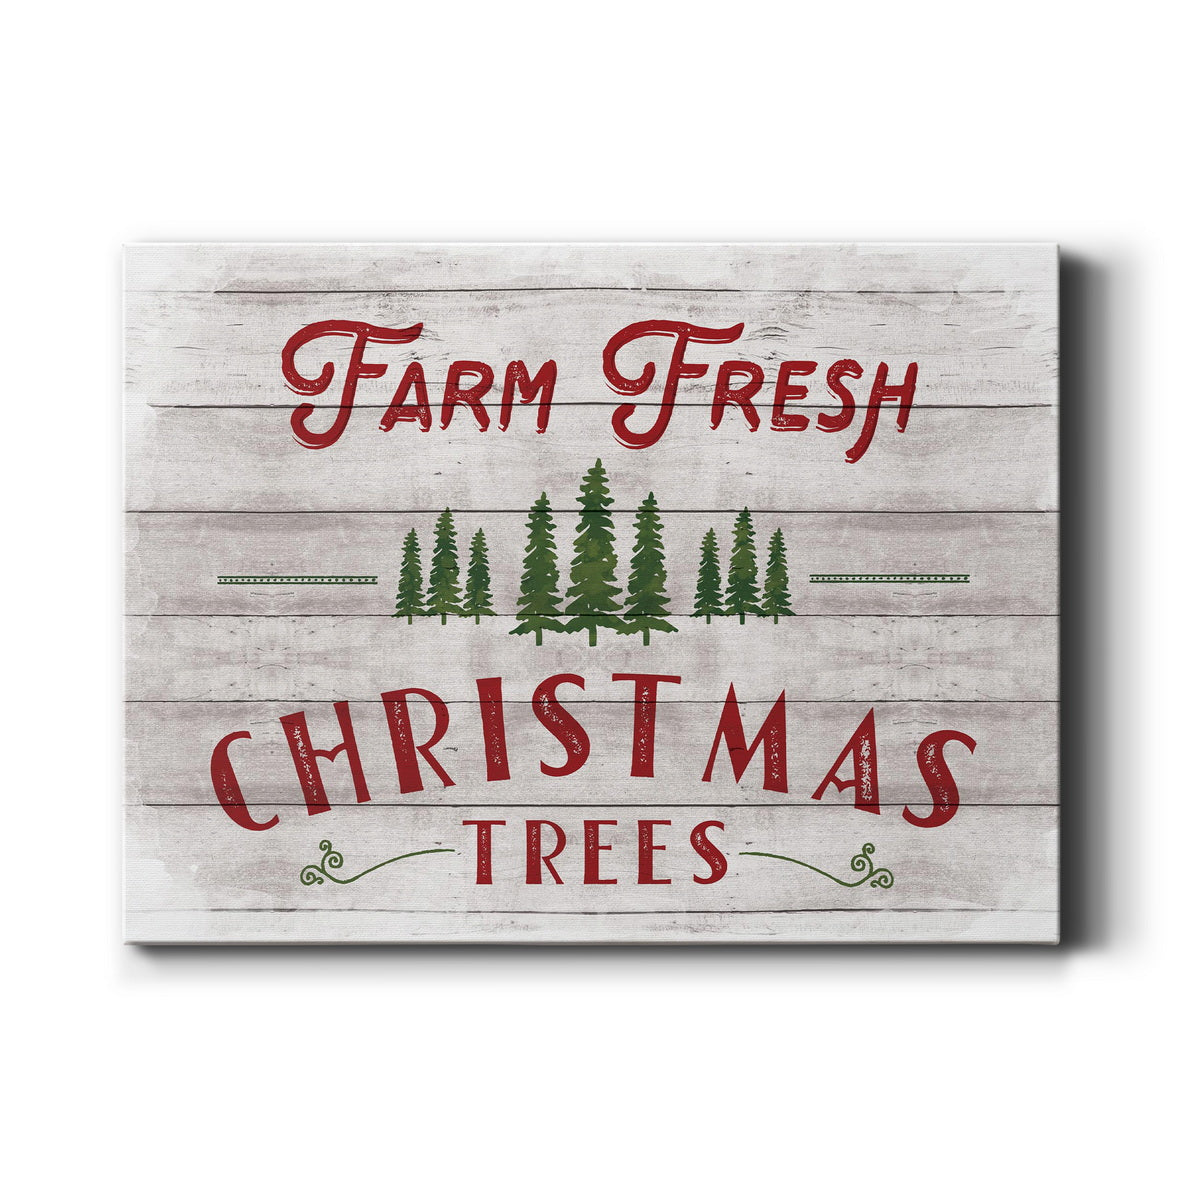 Farm Fresh Christmas Trees - Premium Gallery Wrapped Canvas  - Ready to Hang